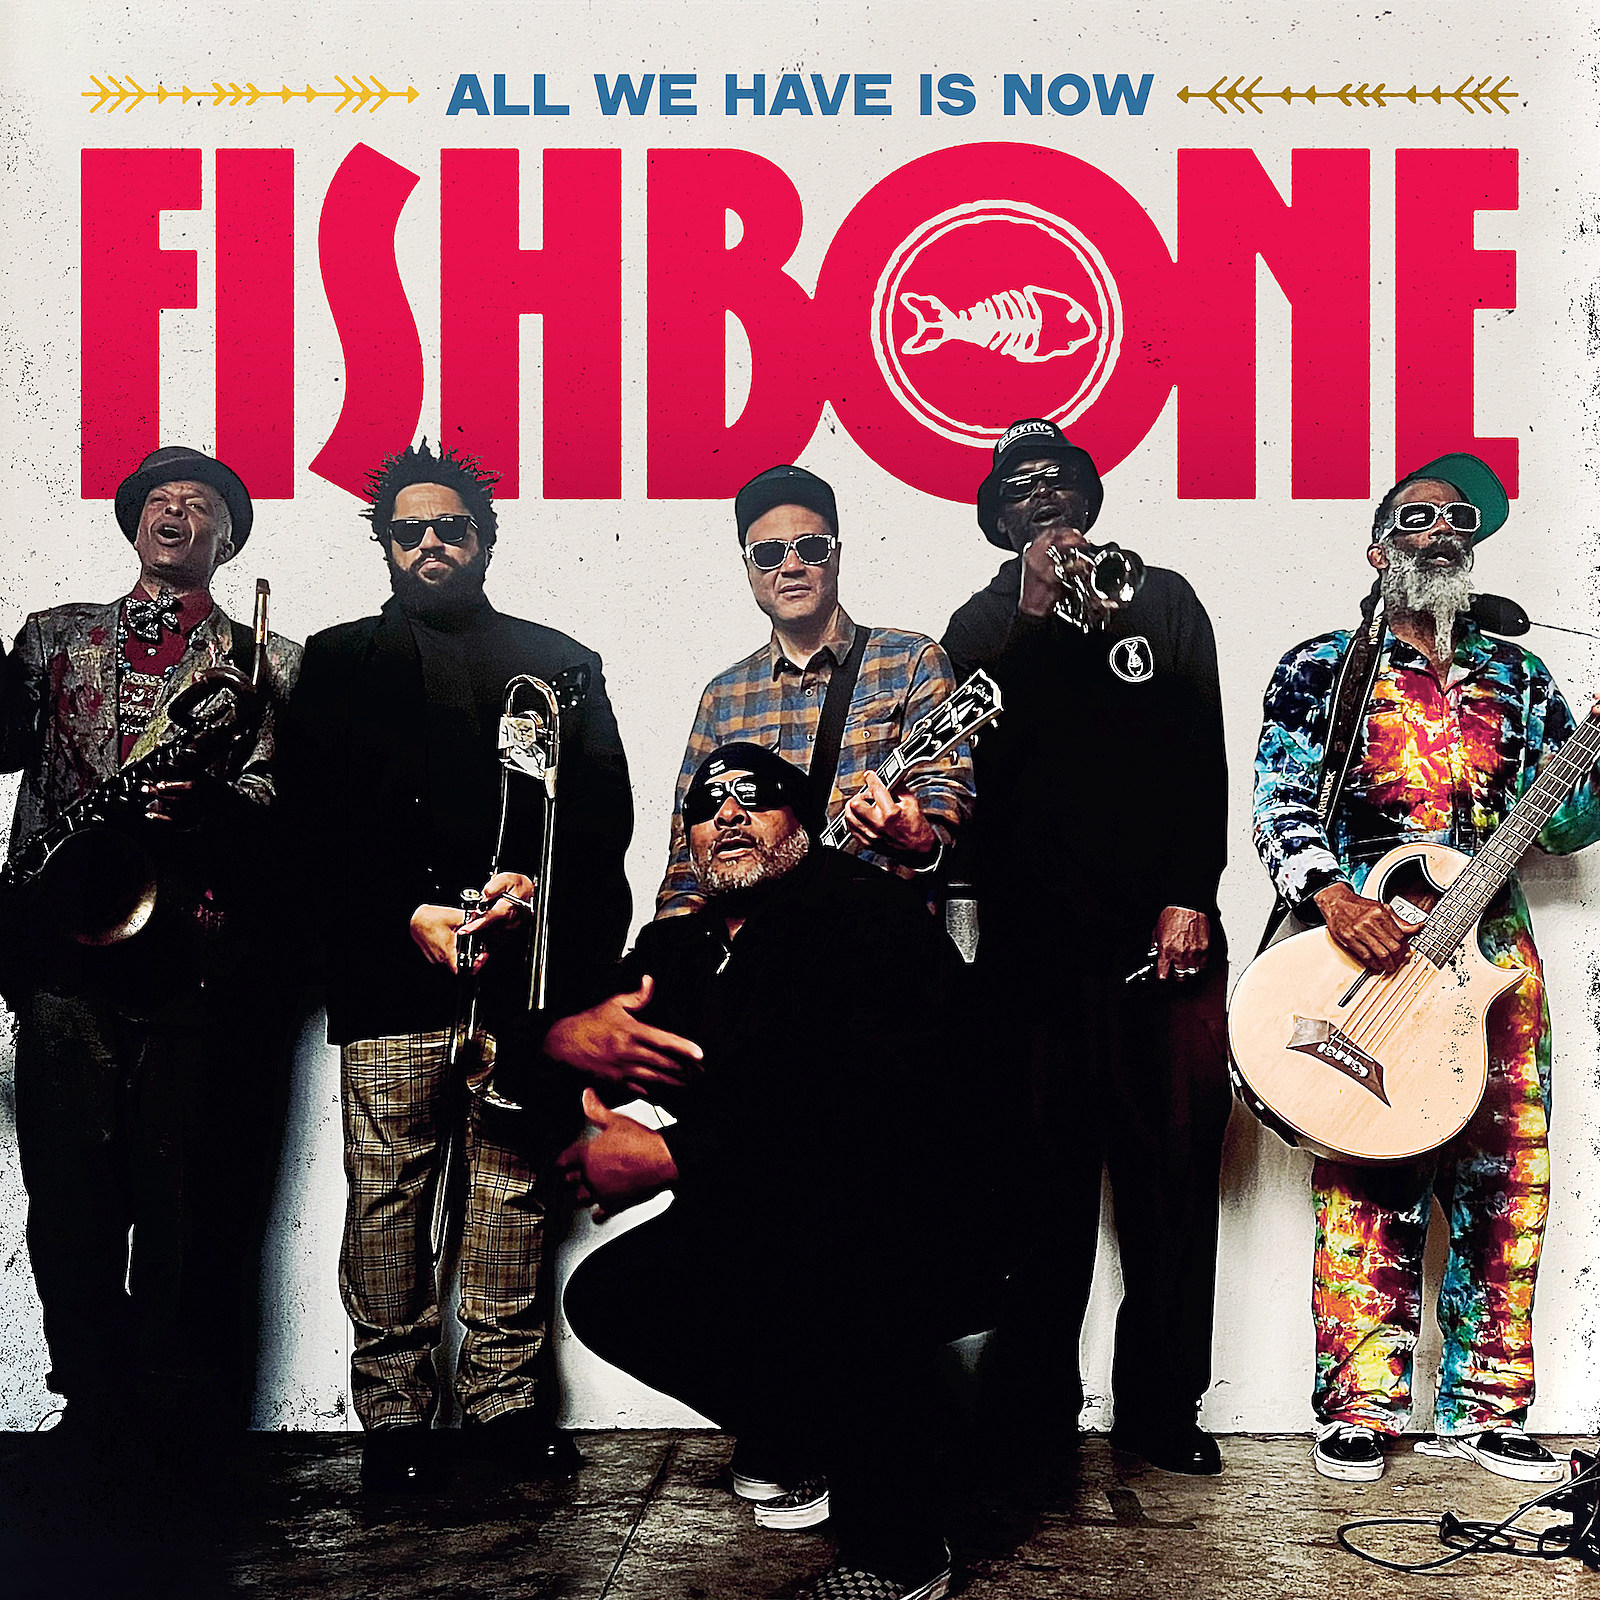 fishbone band tour